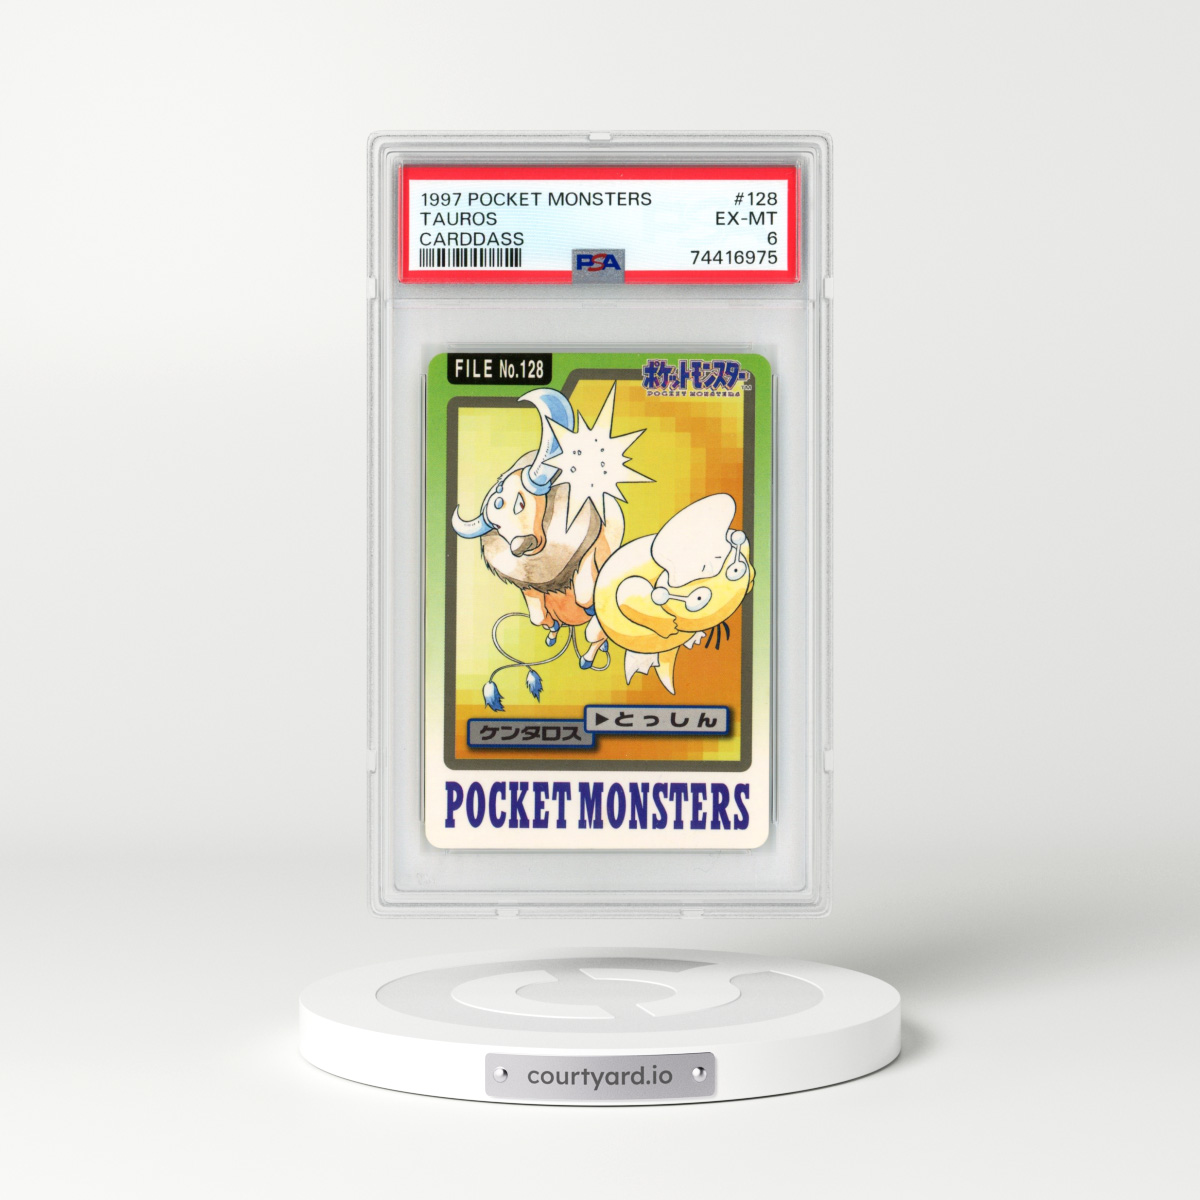 Unown A - Diamond & Pearl #65 Pokemon Card